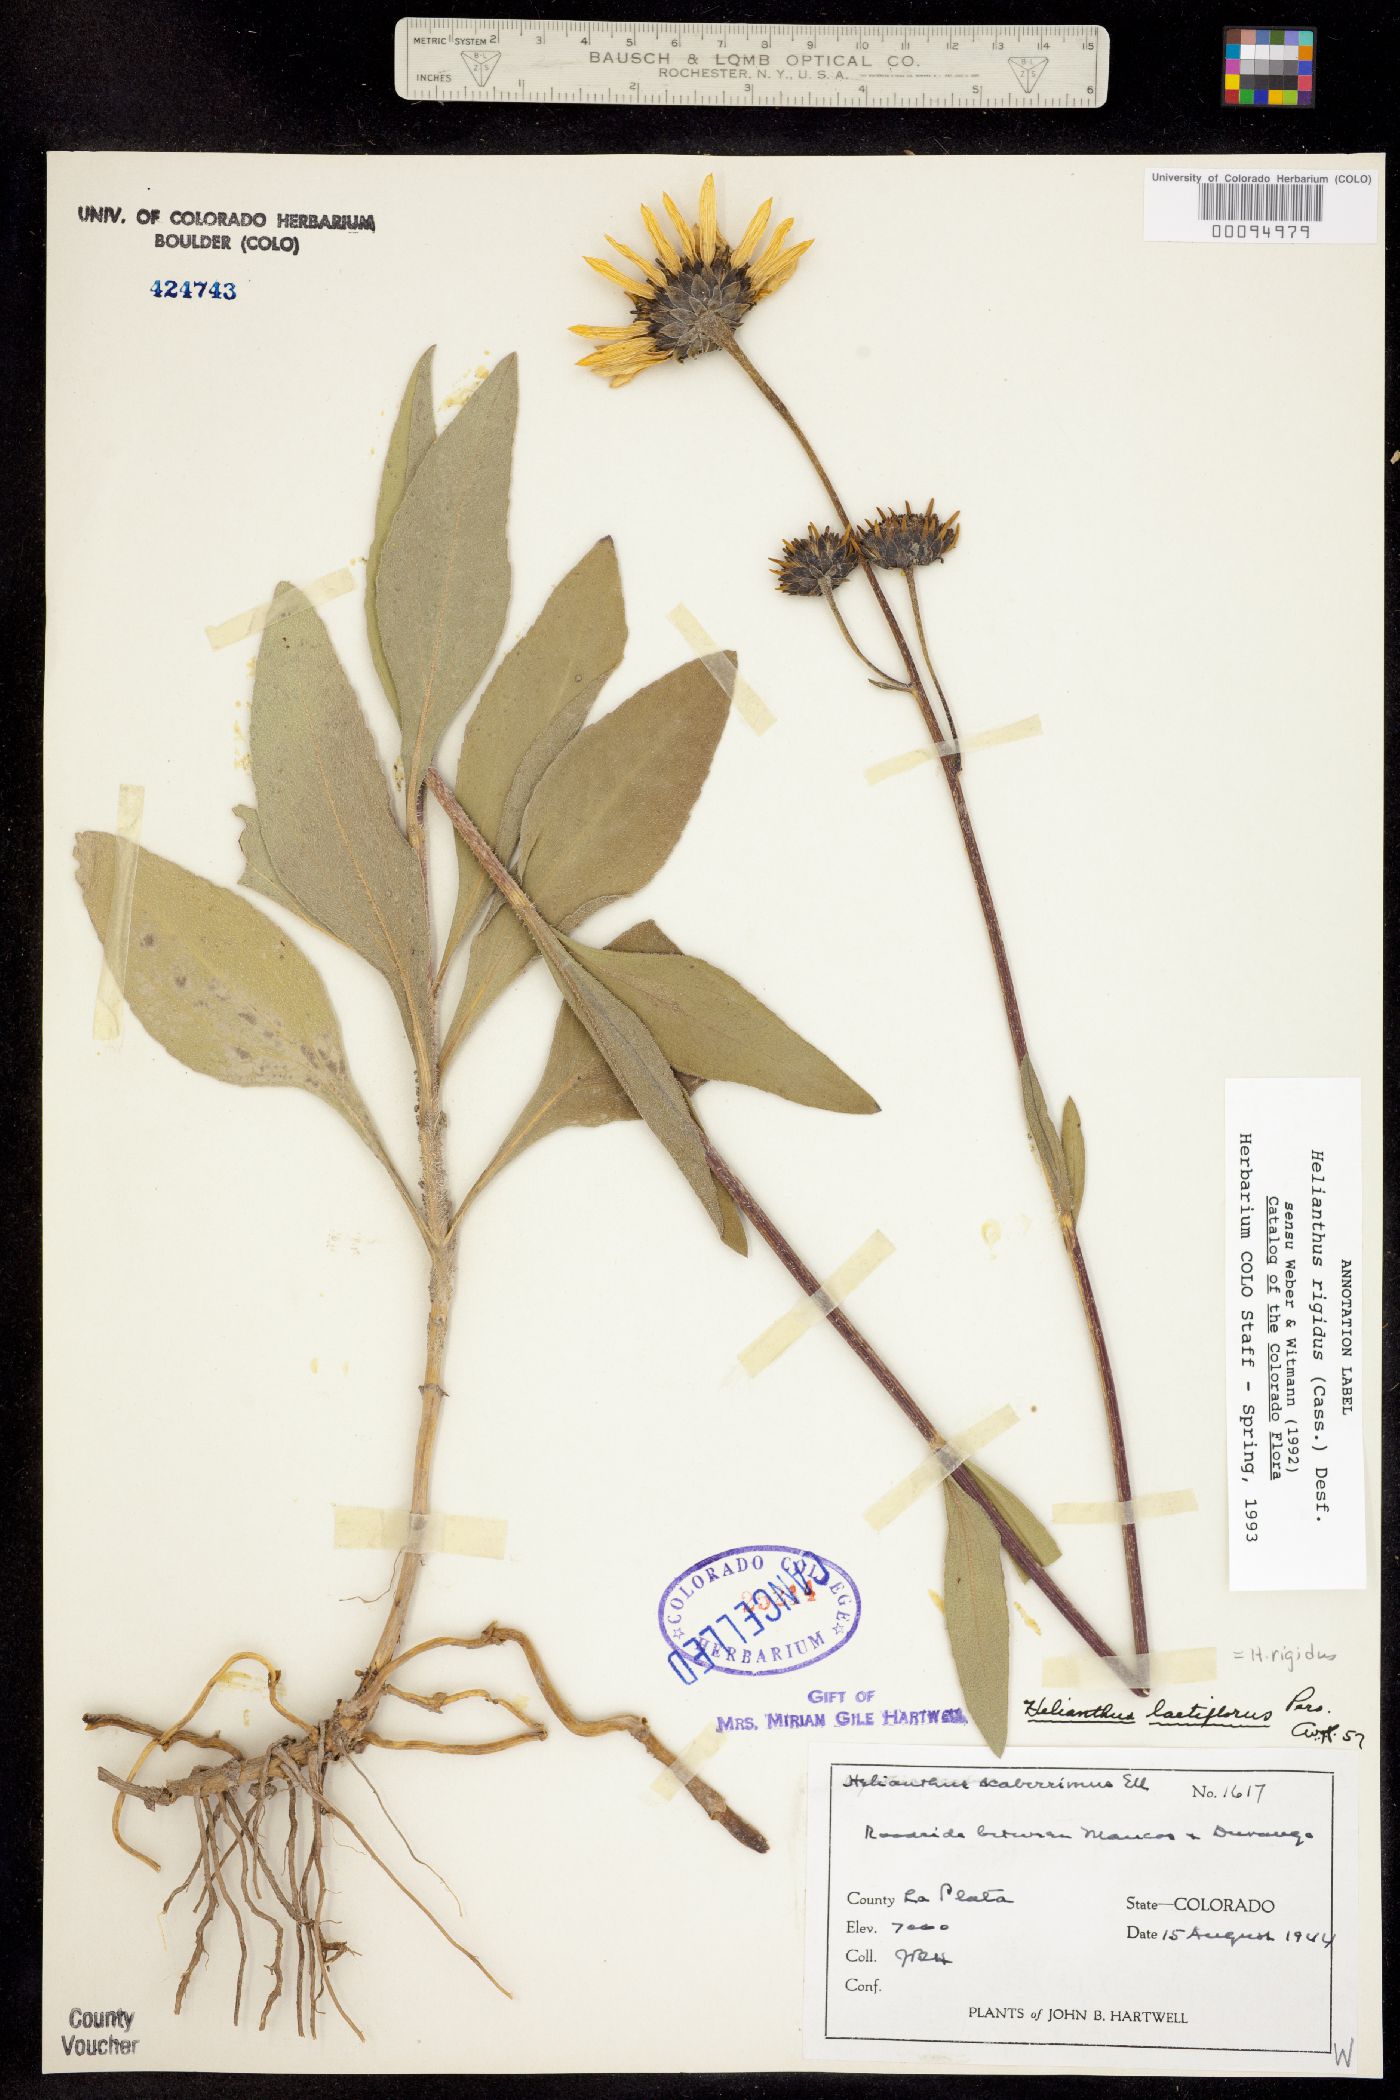 Helianthus rigidus ssp. subrhomboideus image